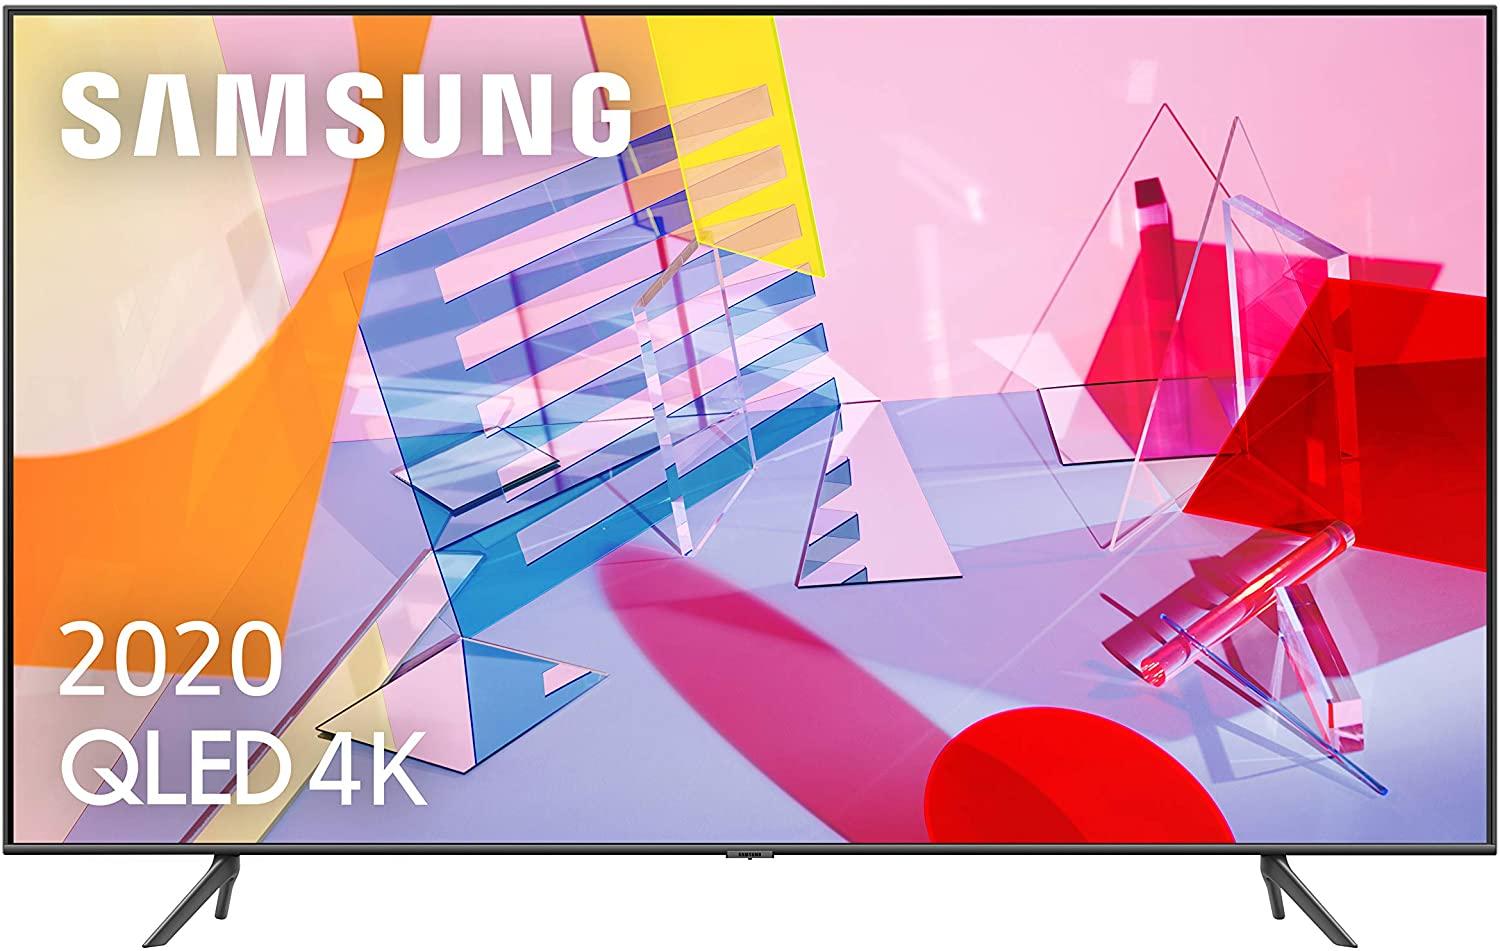 Samsung QLED 4K 2020 65Q60T